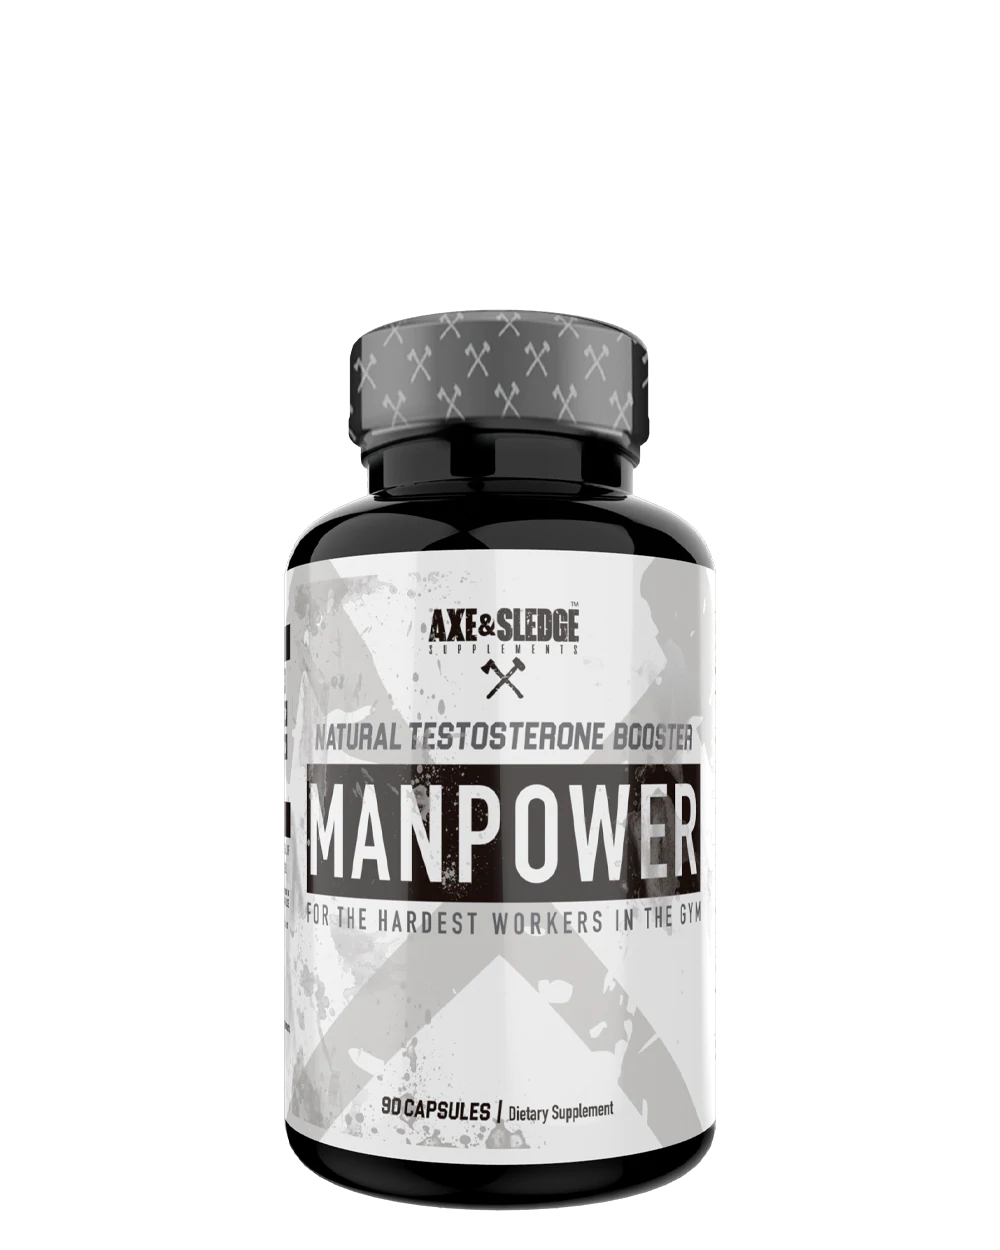 MANPOWER // Natural Testosterone Booster